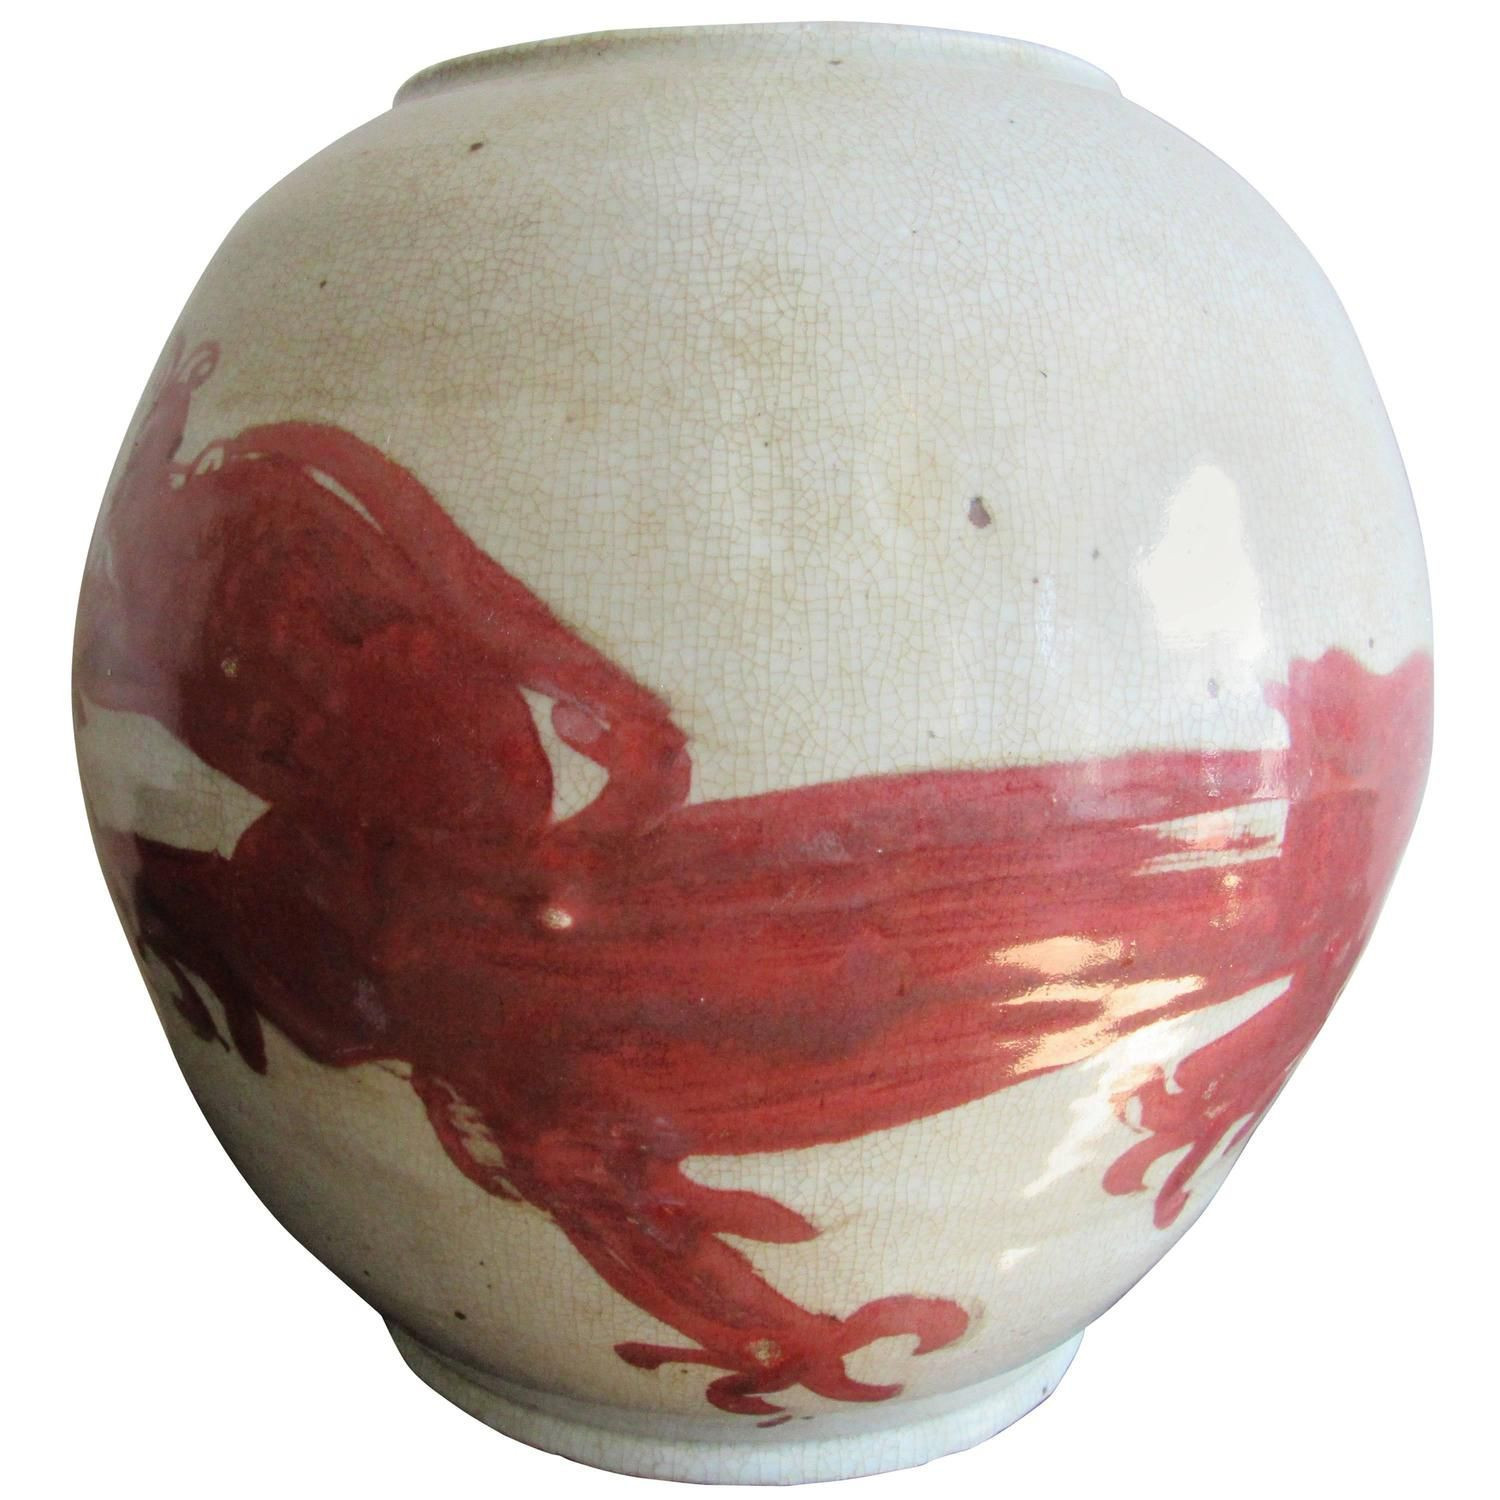 21 Best Ceramic Bud Vase 2024 free download ceramic bud vase of red ceramic vase images luxury lsa flower colour bud vase red h with red ceramic vase pics red and white swatow ware ceramic vessel of red ceramic vase images